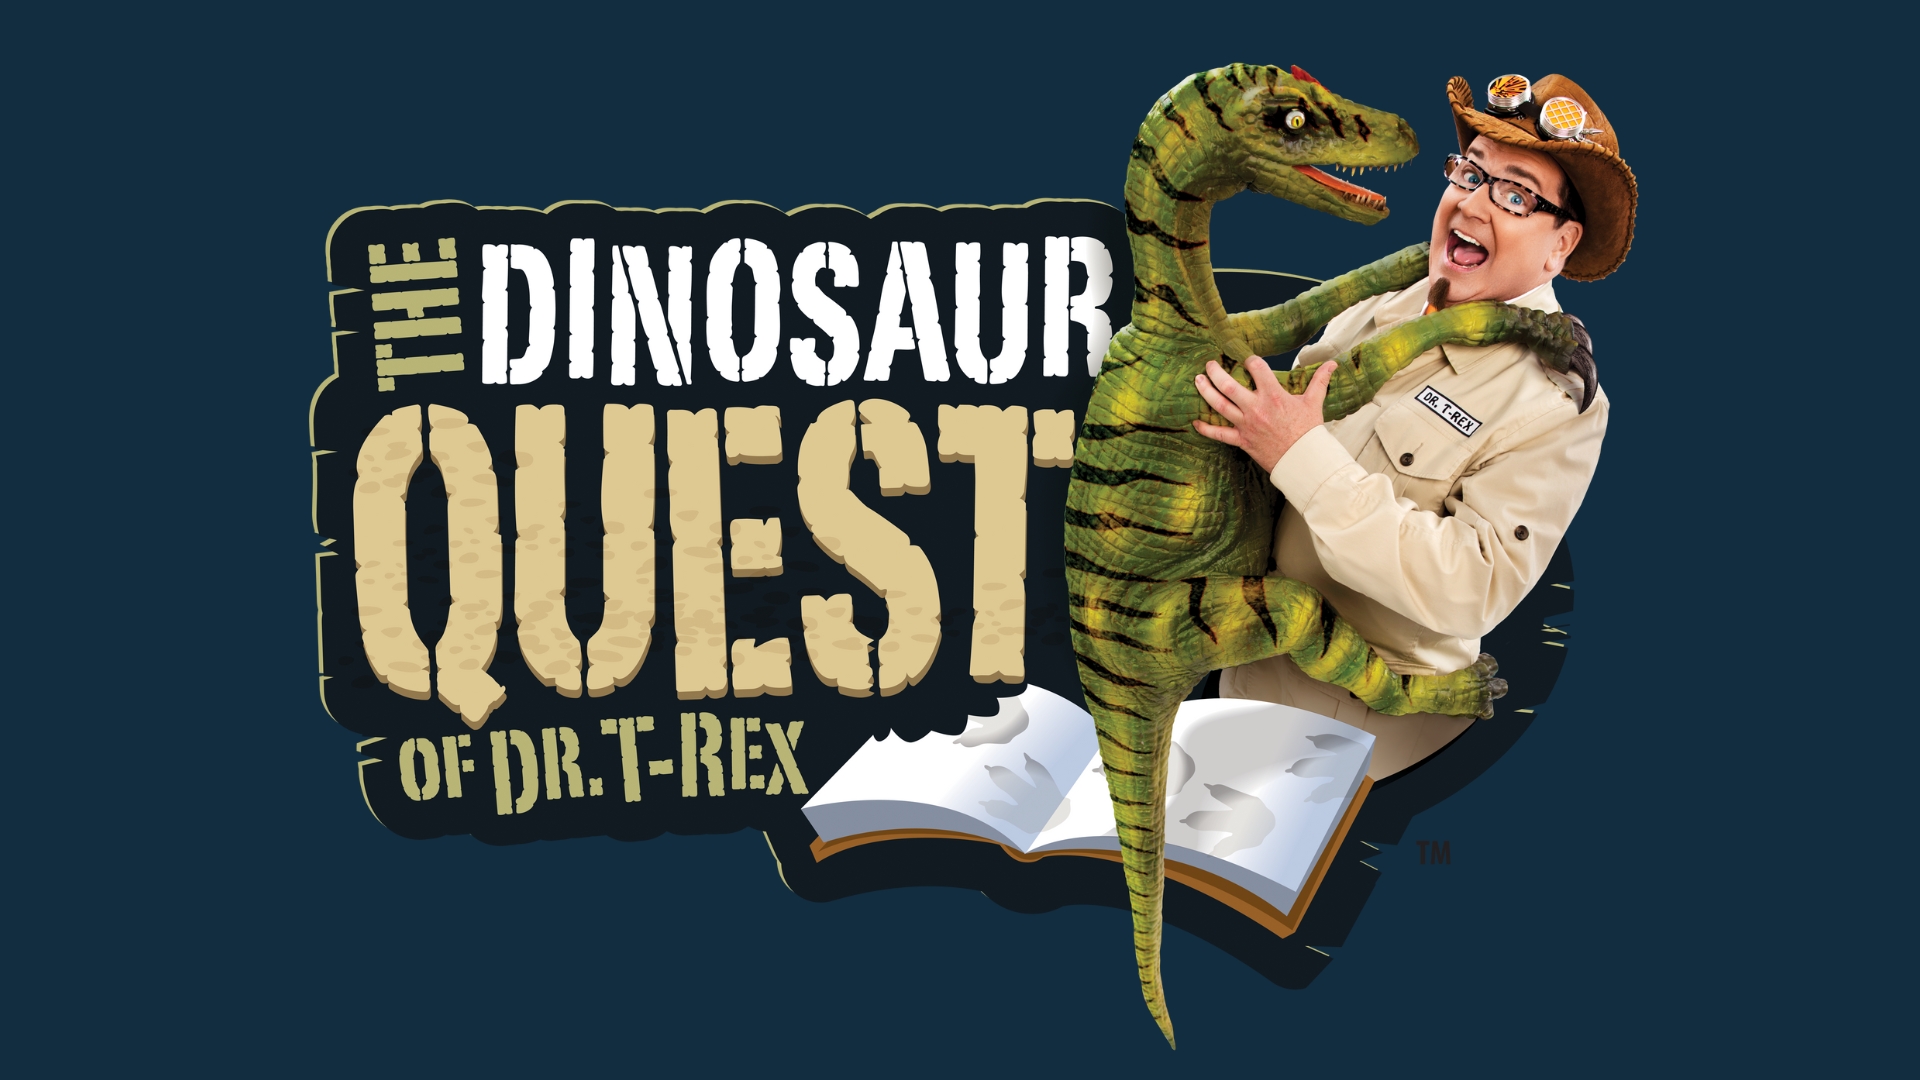 The Dinosaur Quest of Dr. T-Rex